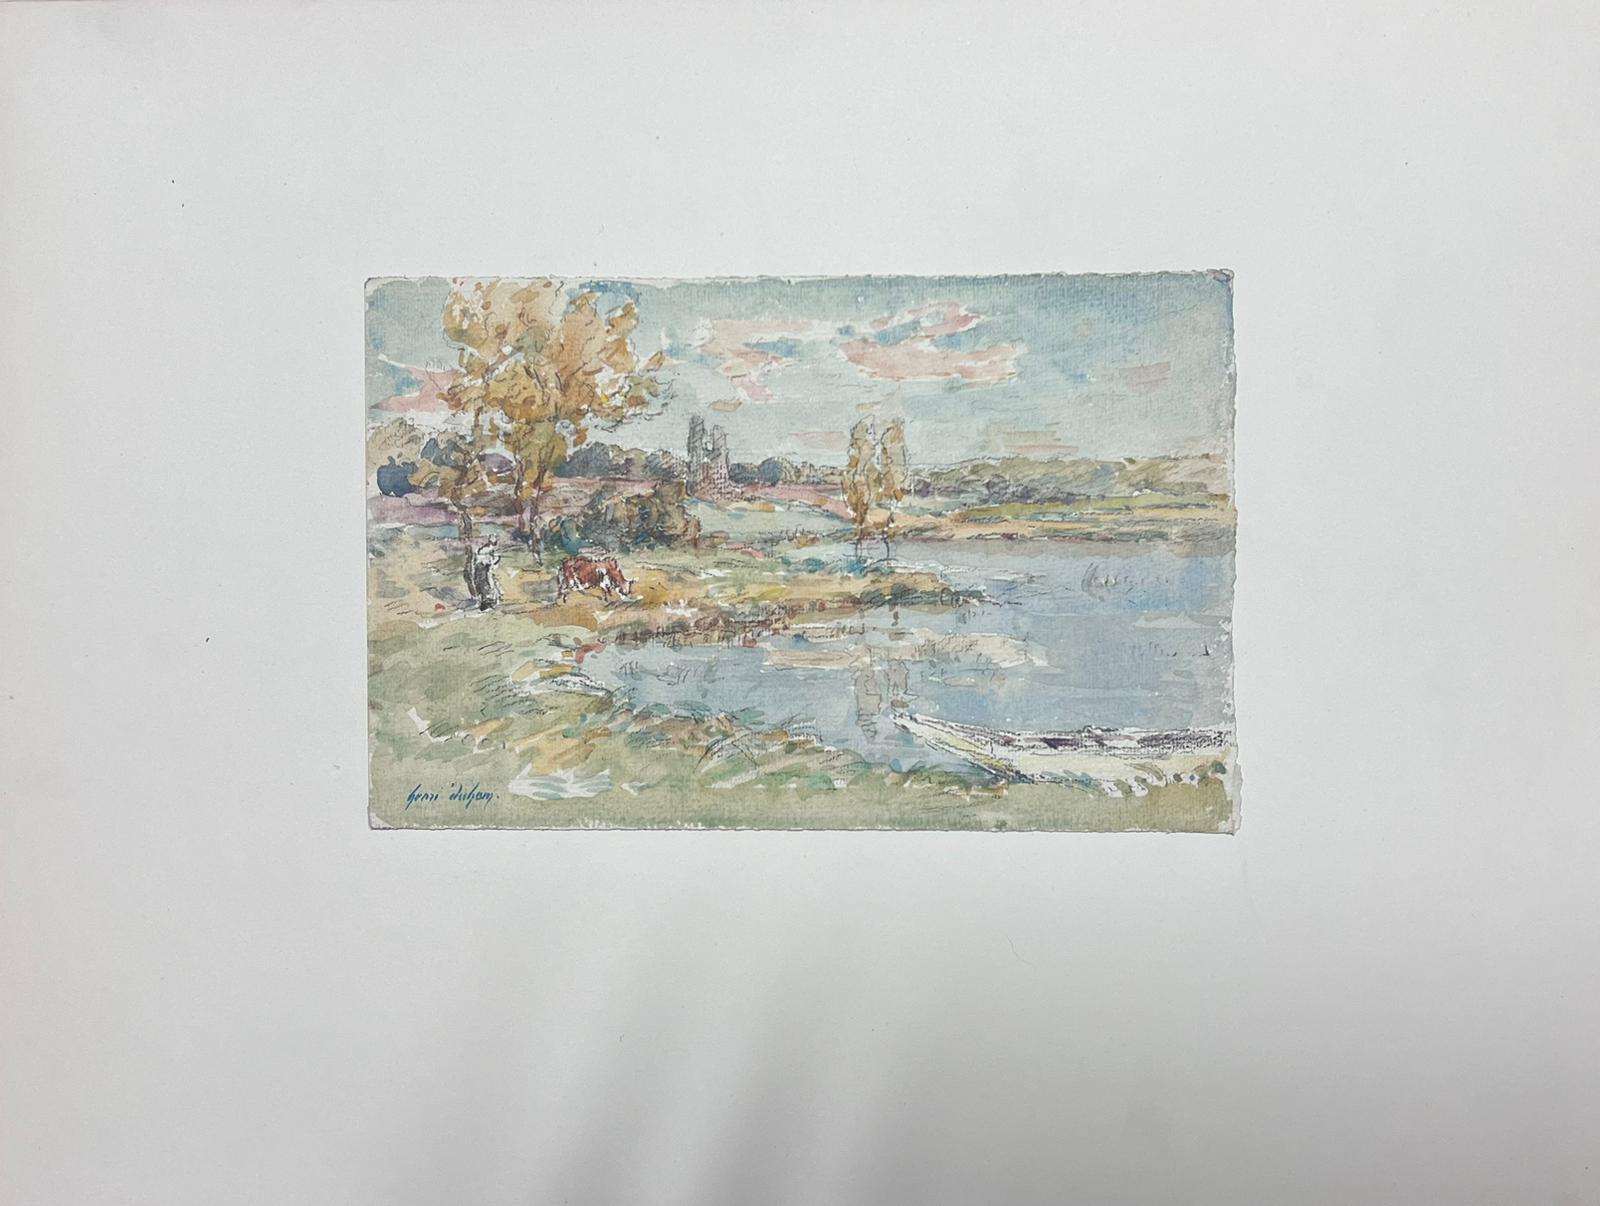 Fine Antique French Impressionist Painting Landscape with River Cow & Figure - Art by Henri Aime Duhem